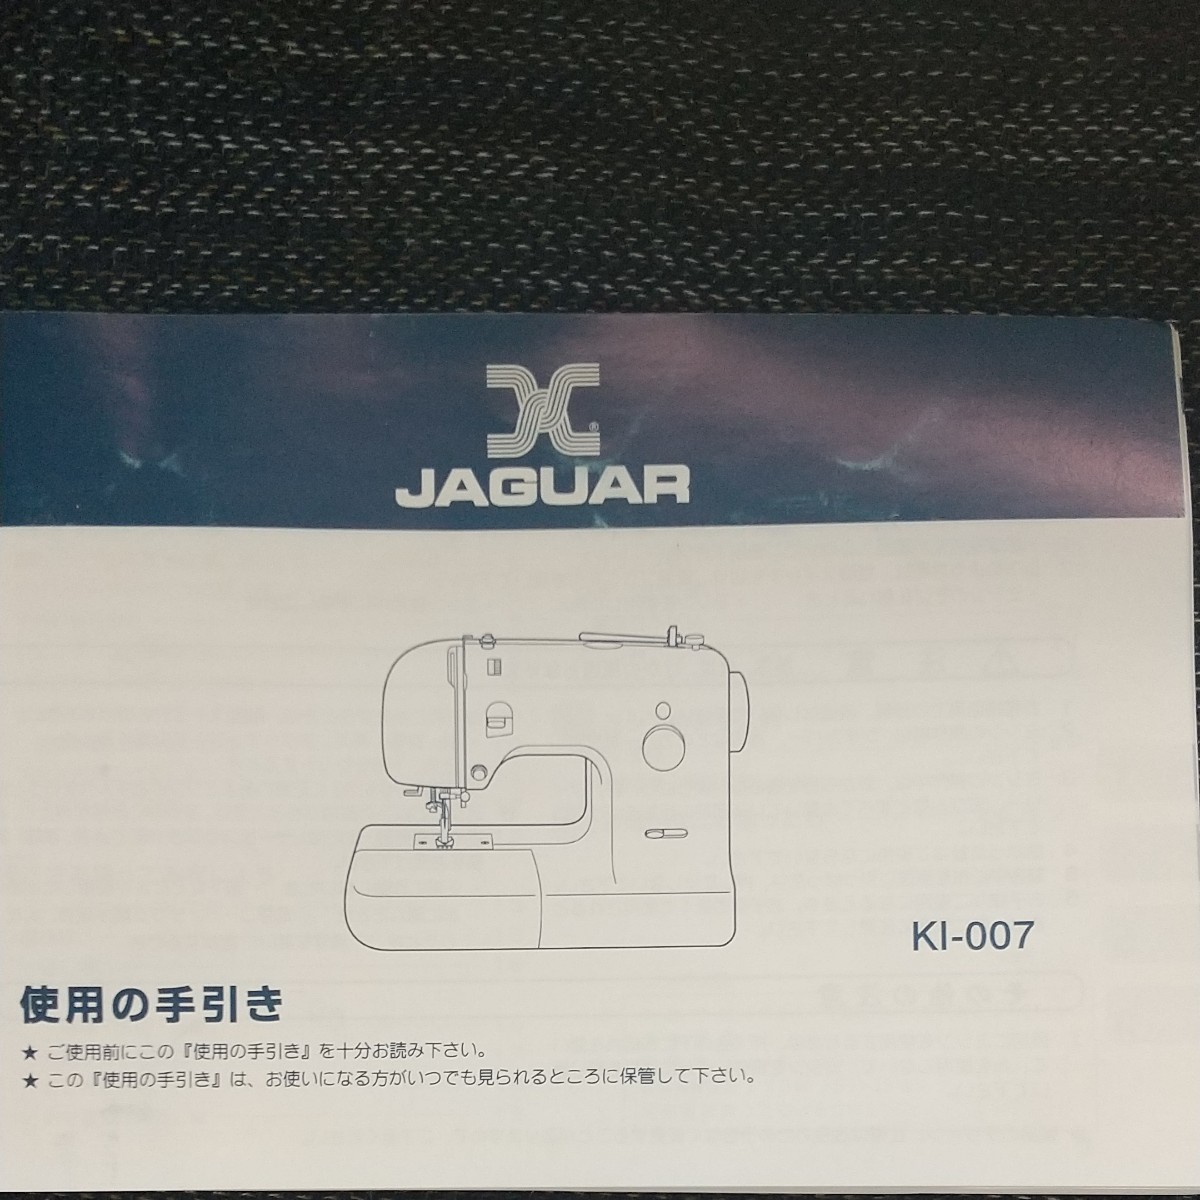  JAGUAR    ジャガー  ミシン  KI-007   ジャガー電子コントロールミシン  ジャンク品